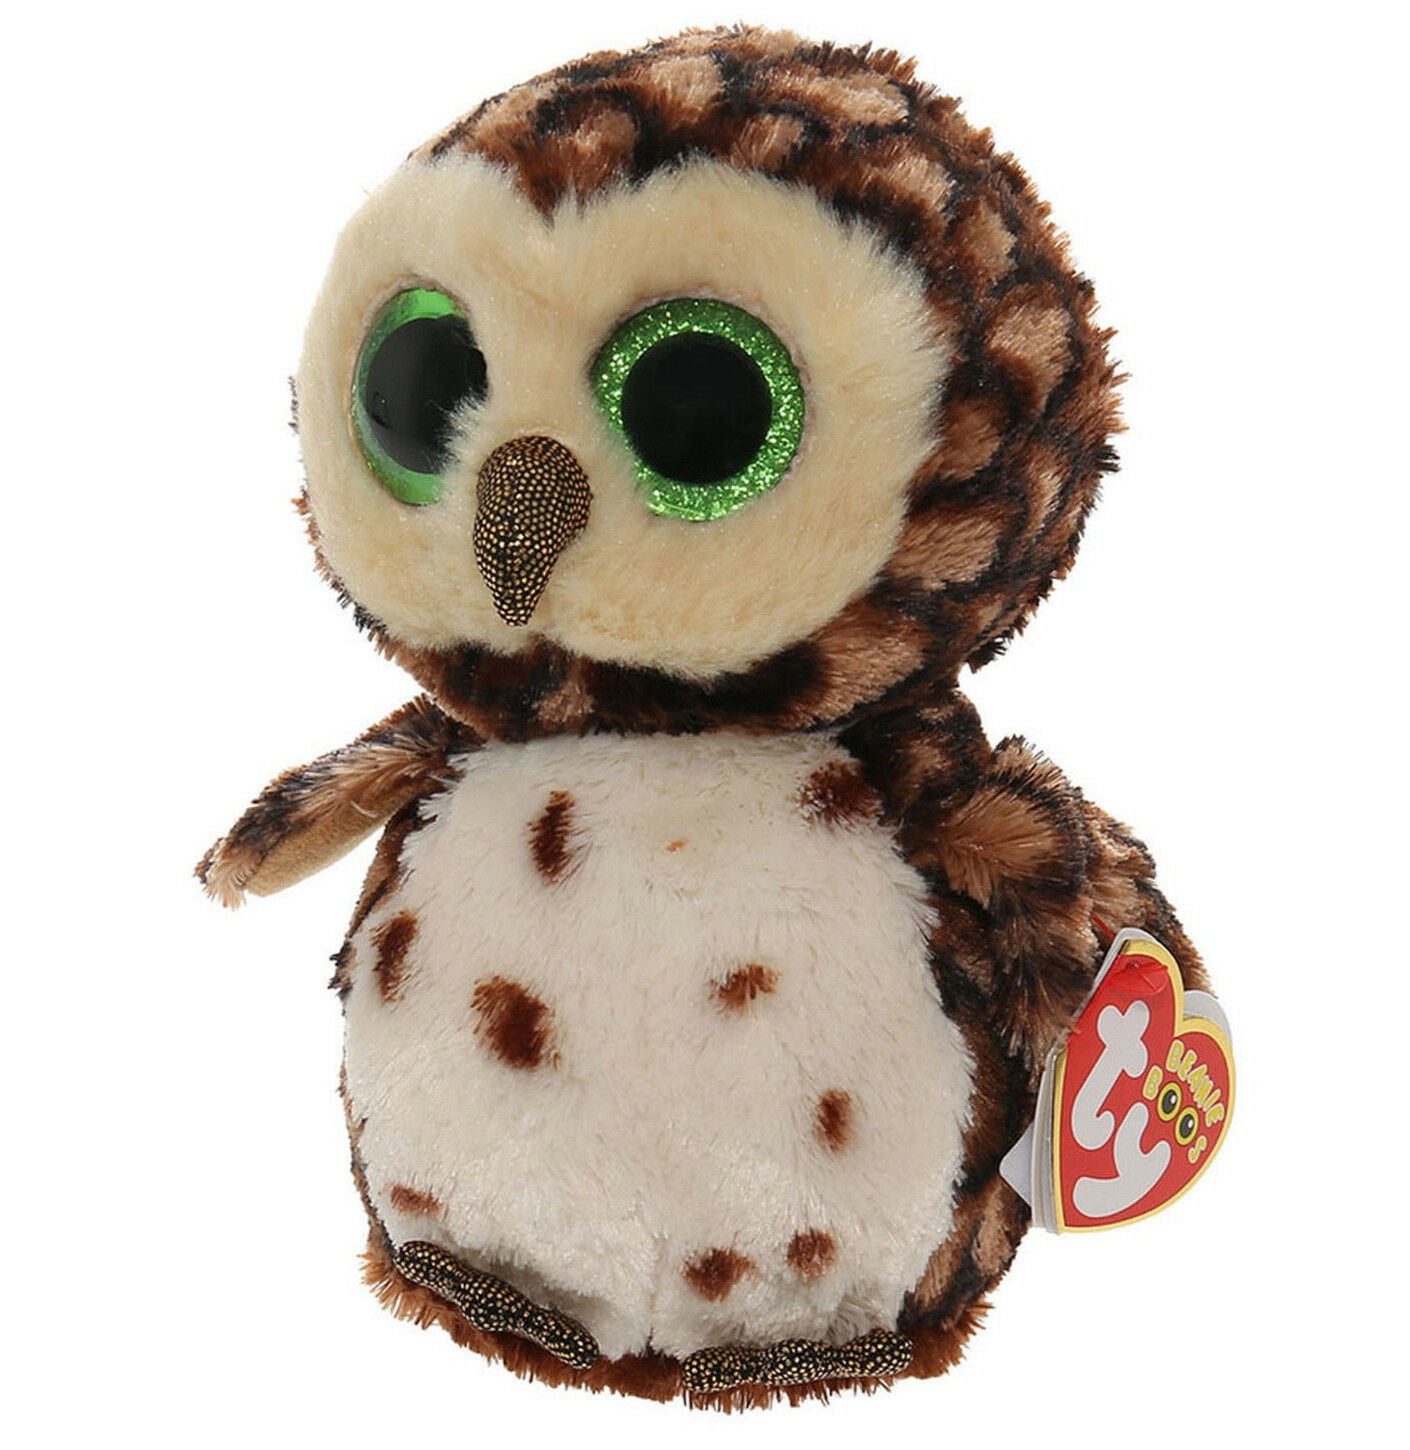 Ty Beanie Boos Sammy The Brown Owl Medium Buddy 9" Size 2016 MWMT for sale online 